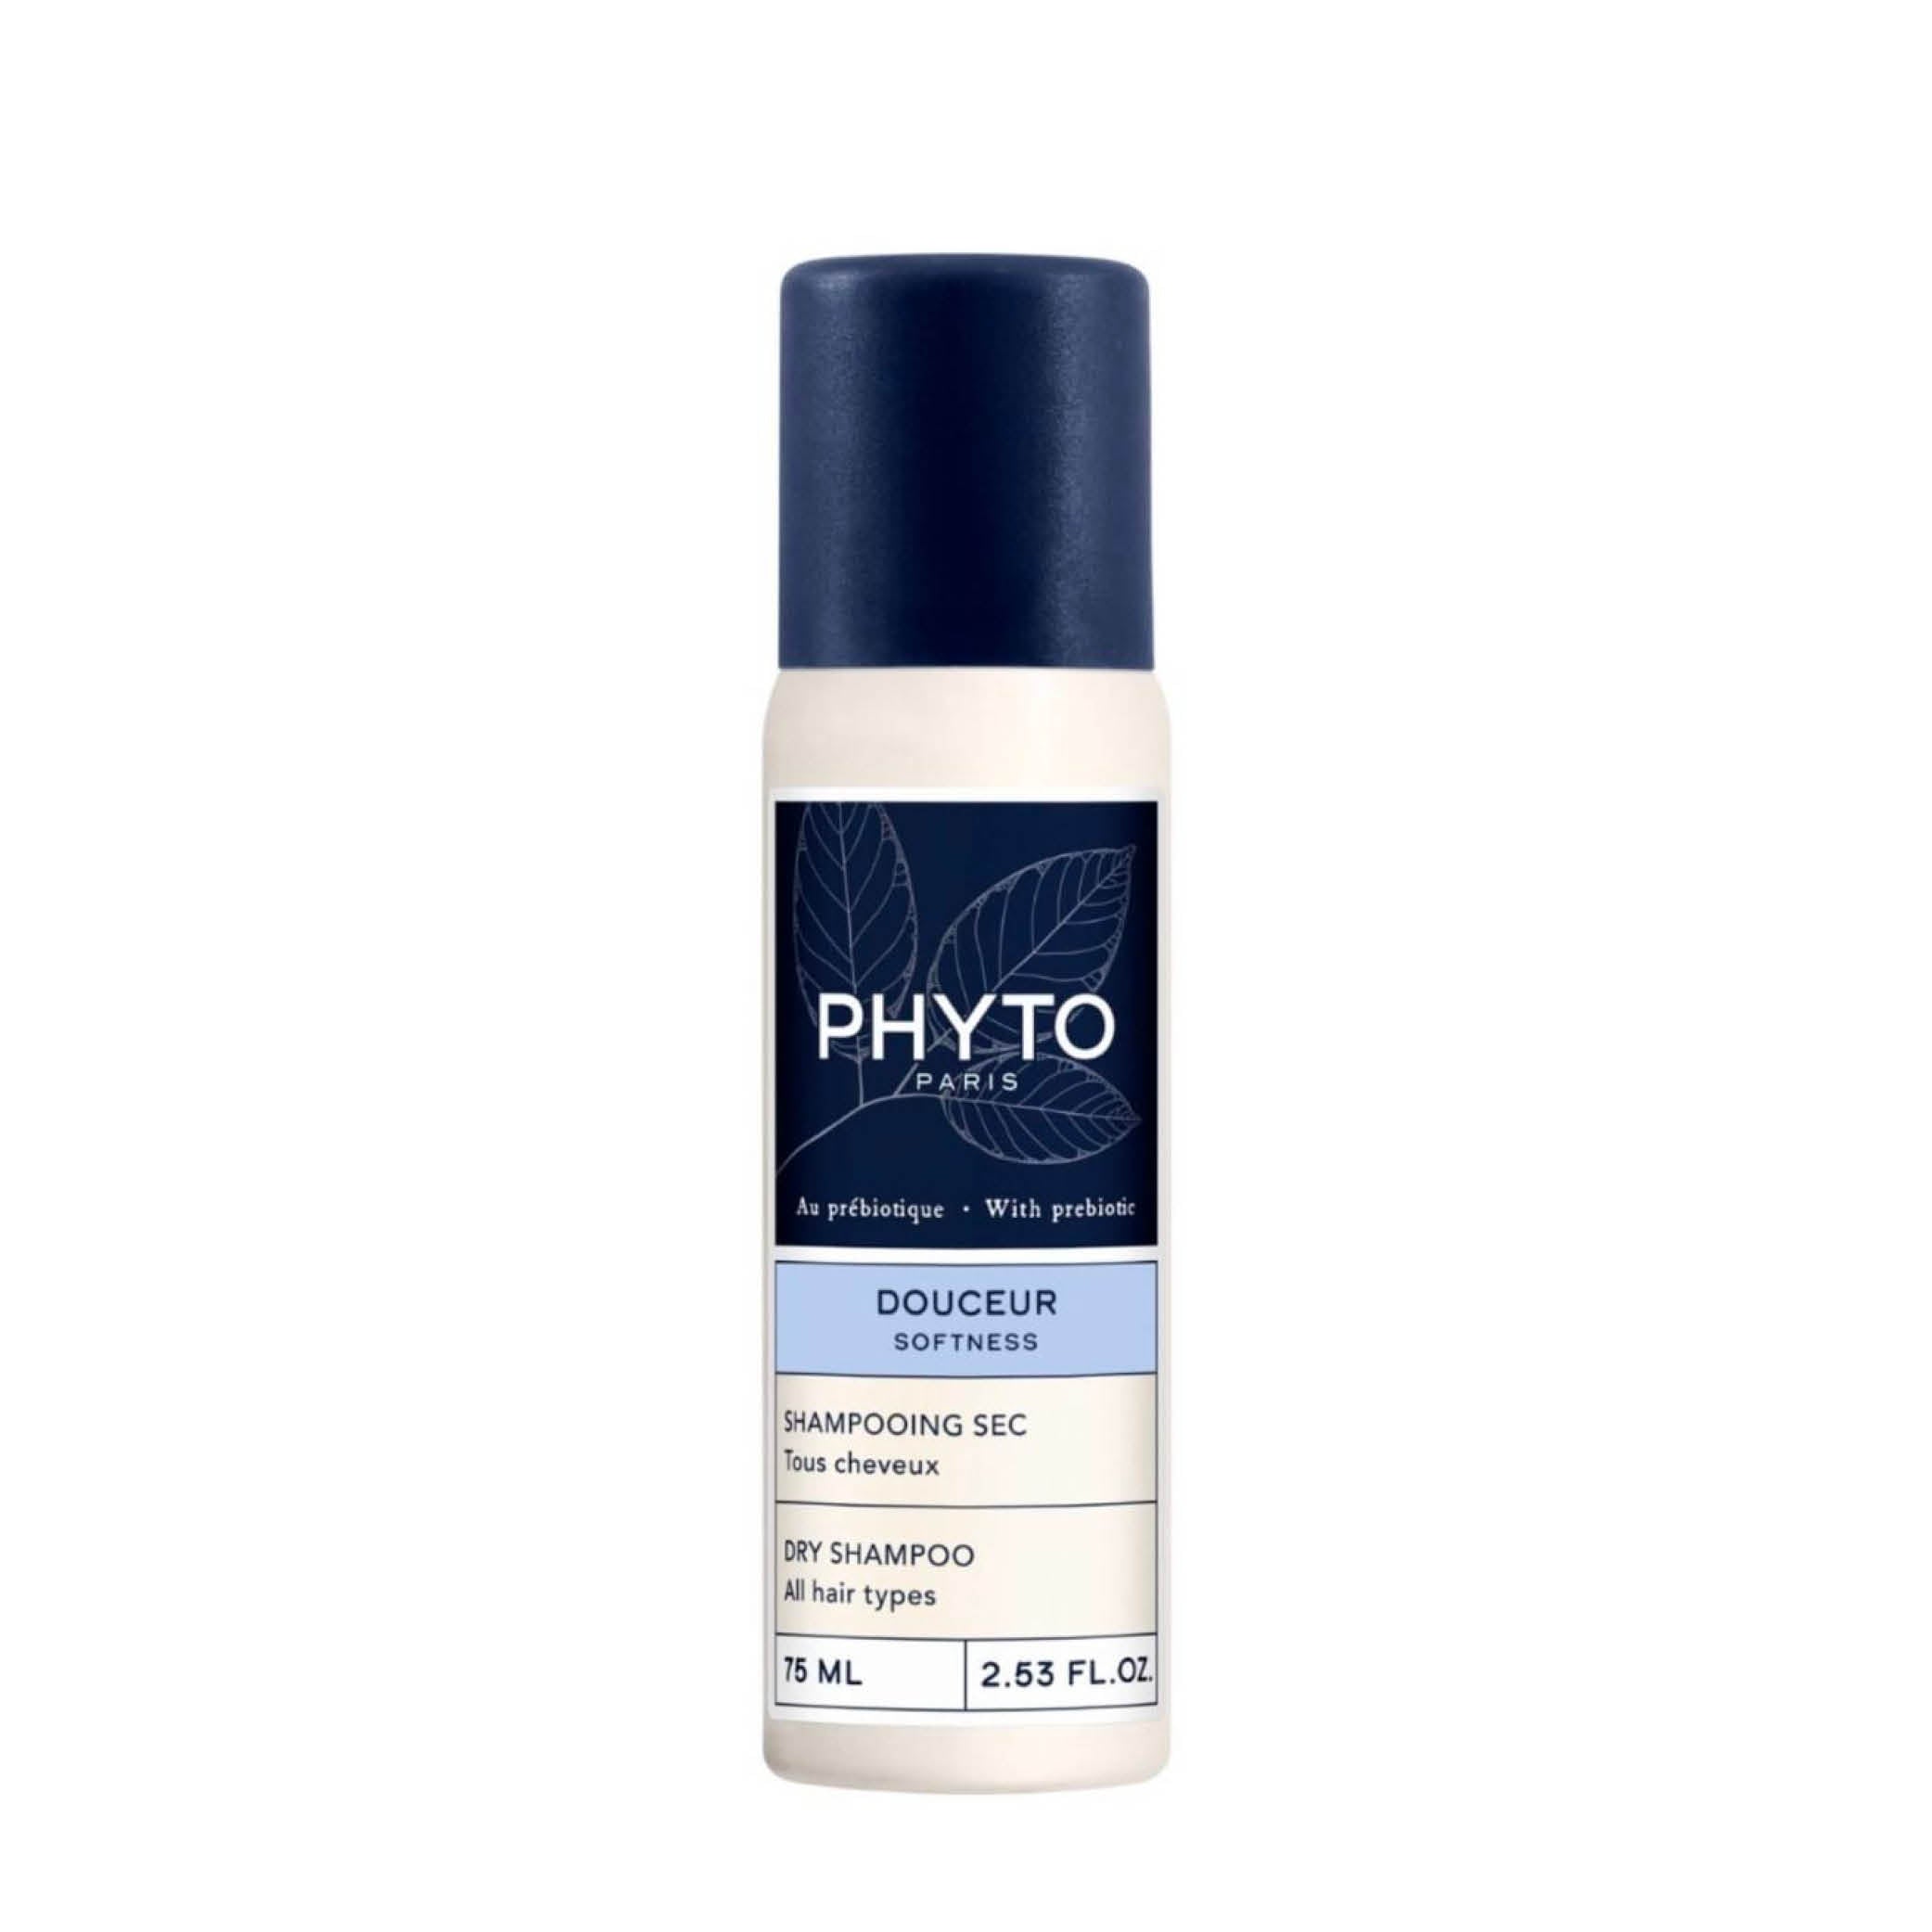 PHYTOSOFTNESS Dry Shampoo